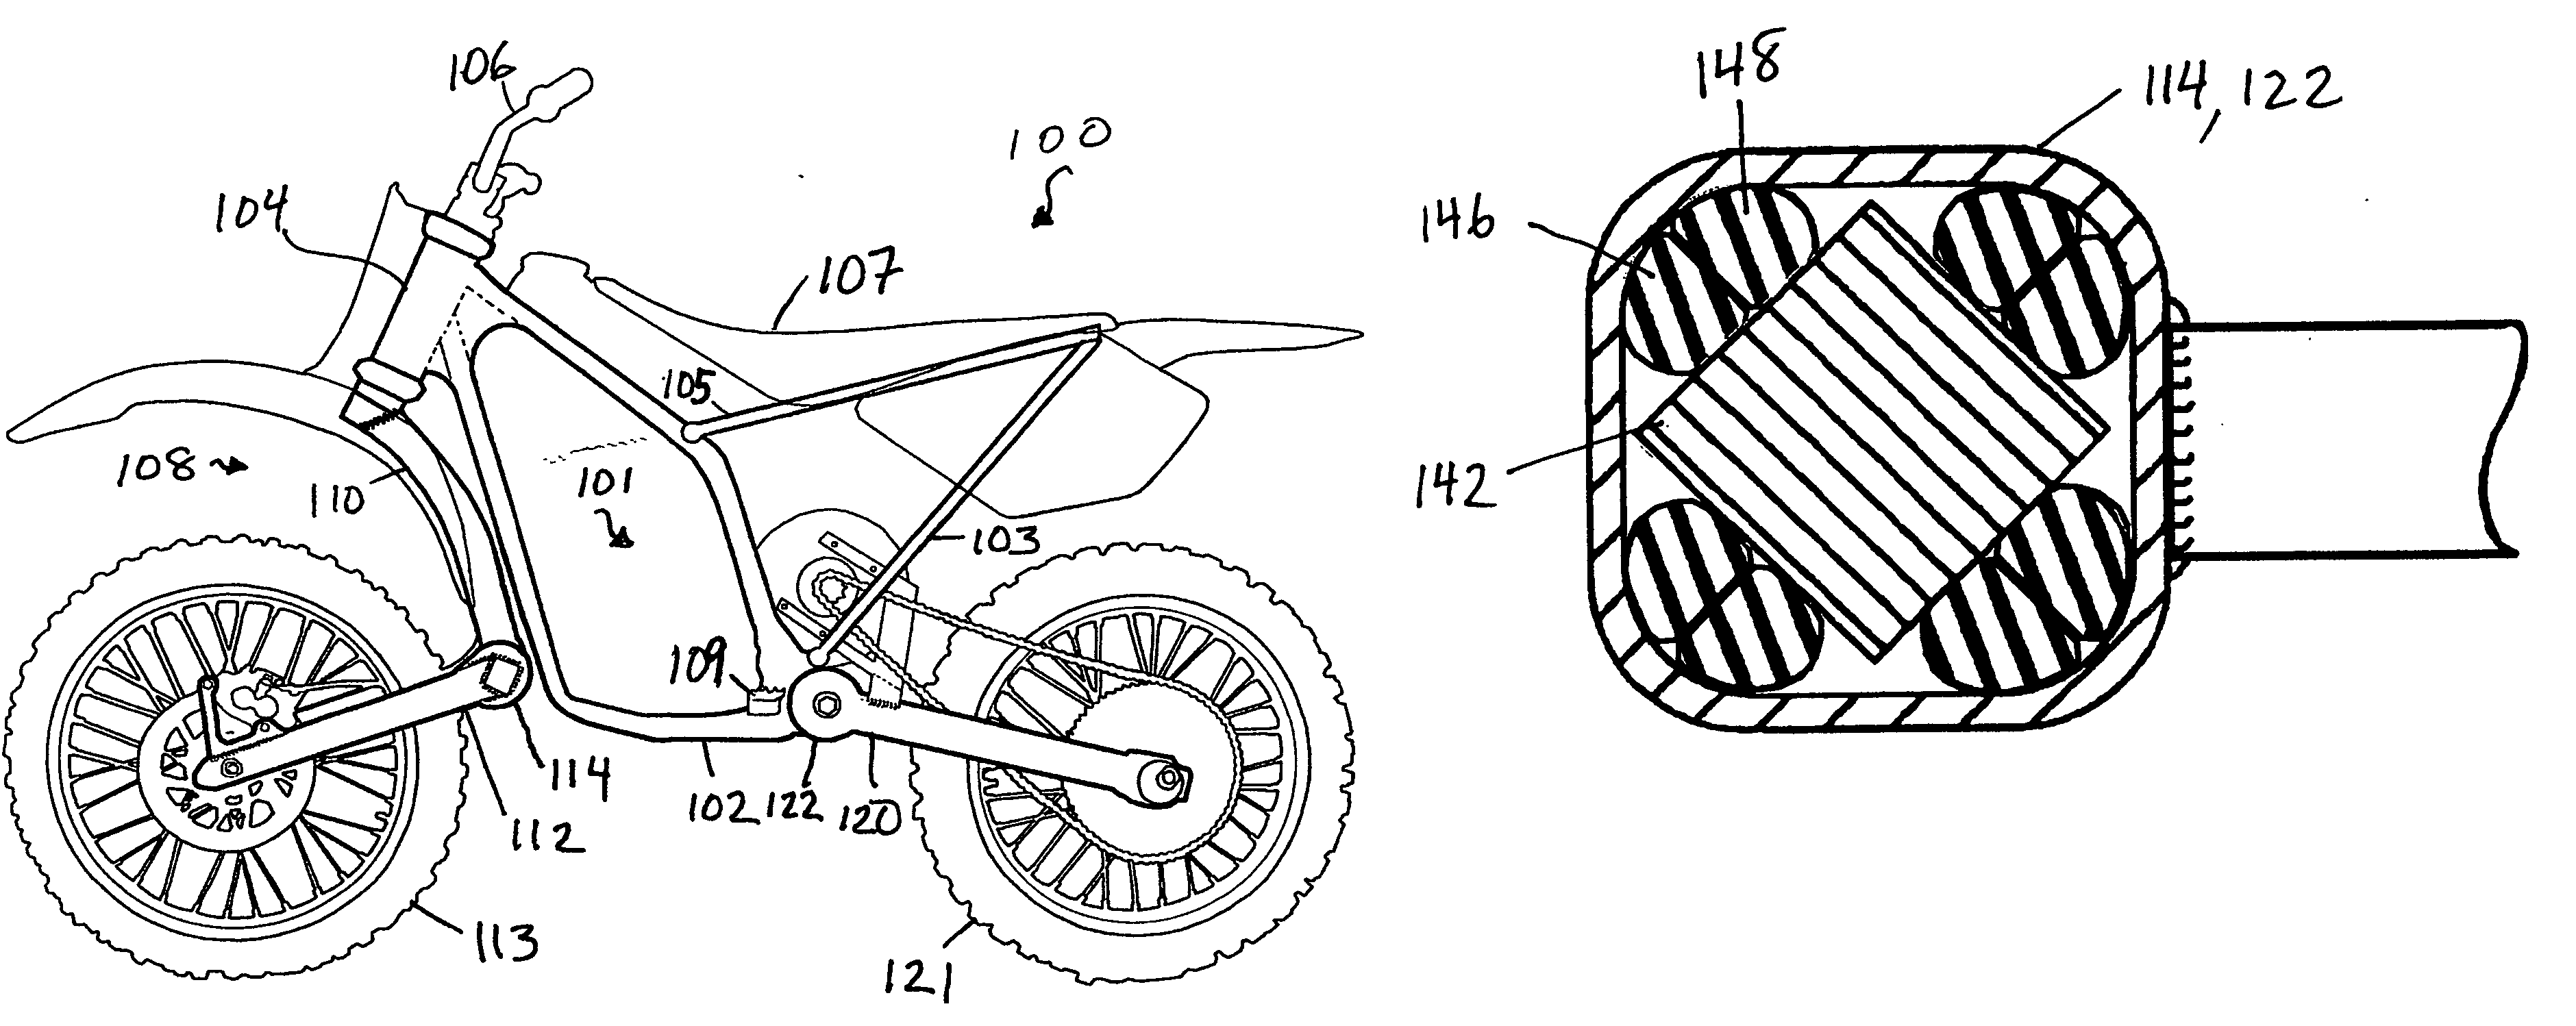 Motorcycle having torsion-acting shock absorption